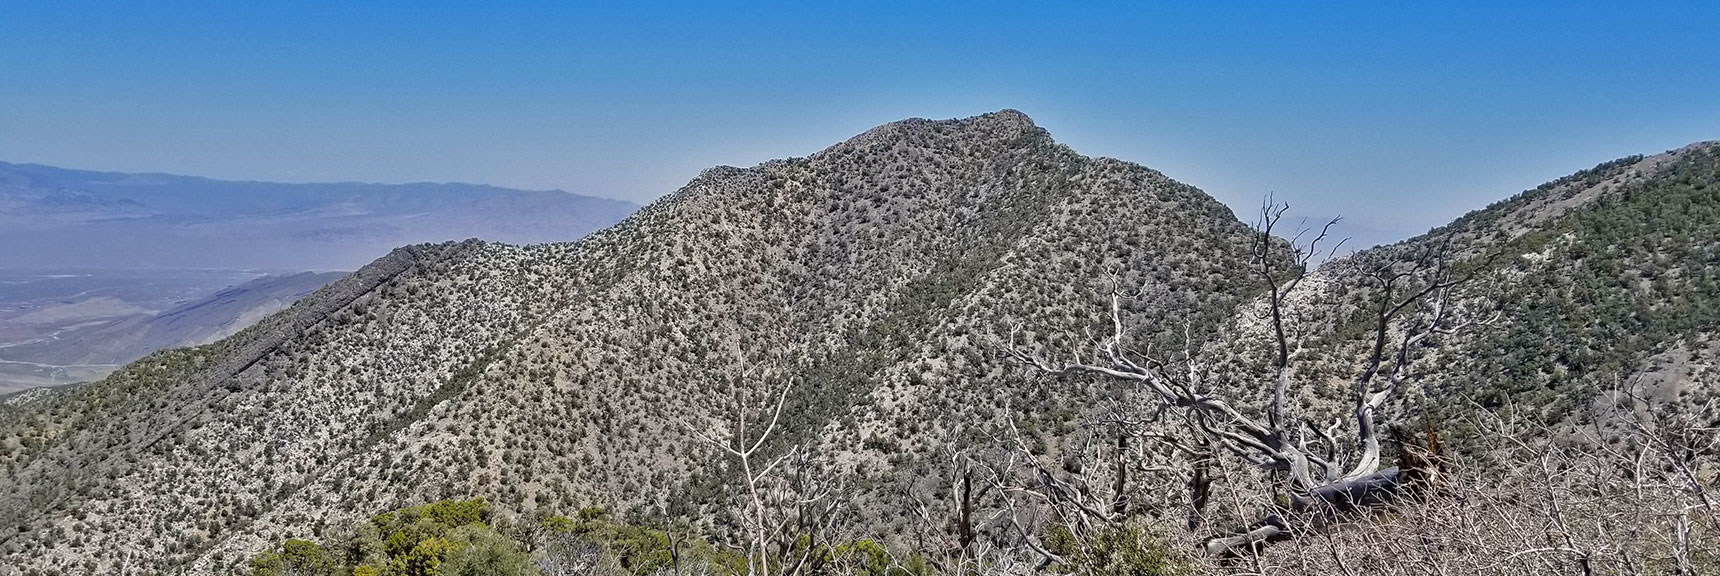 La Madre Mountain Viewed from Keystone Thrust Just West of El Padre Mountain, La Madre Mountains Wilderness, Nevada